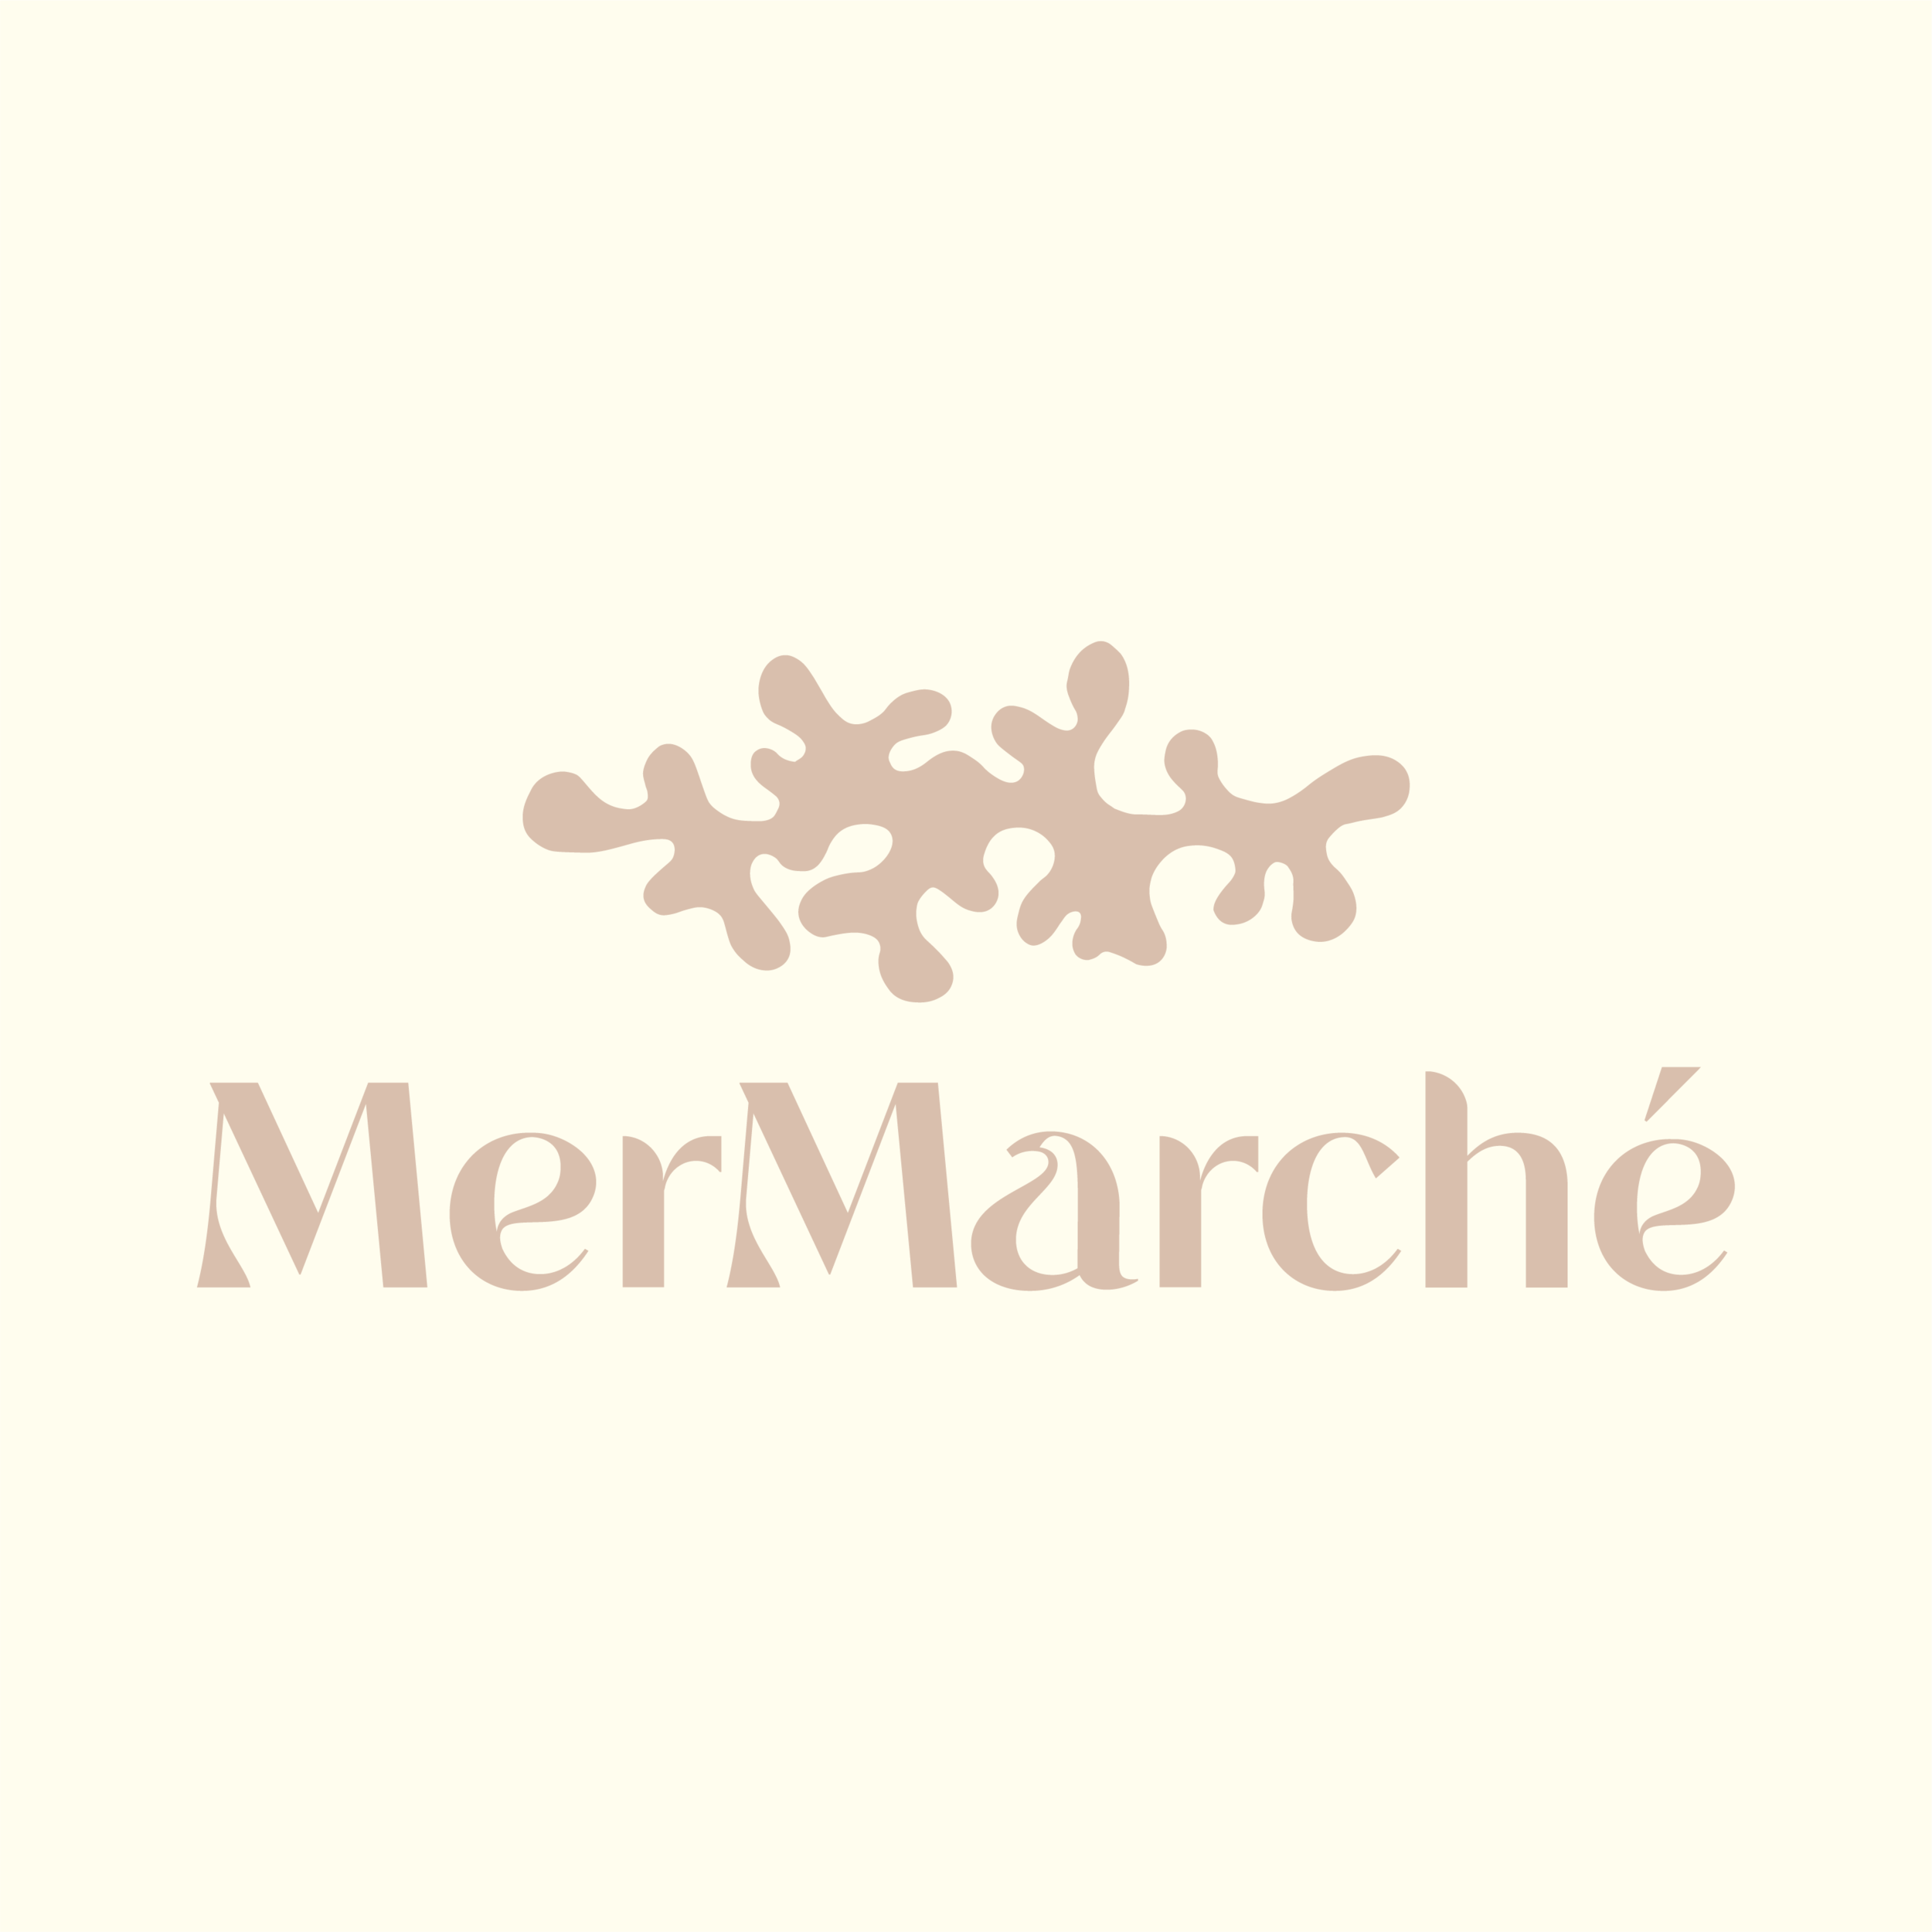 mermarche_final_logo_square-01.png